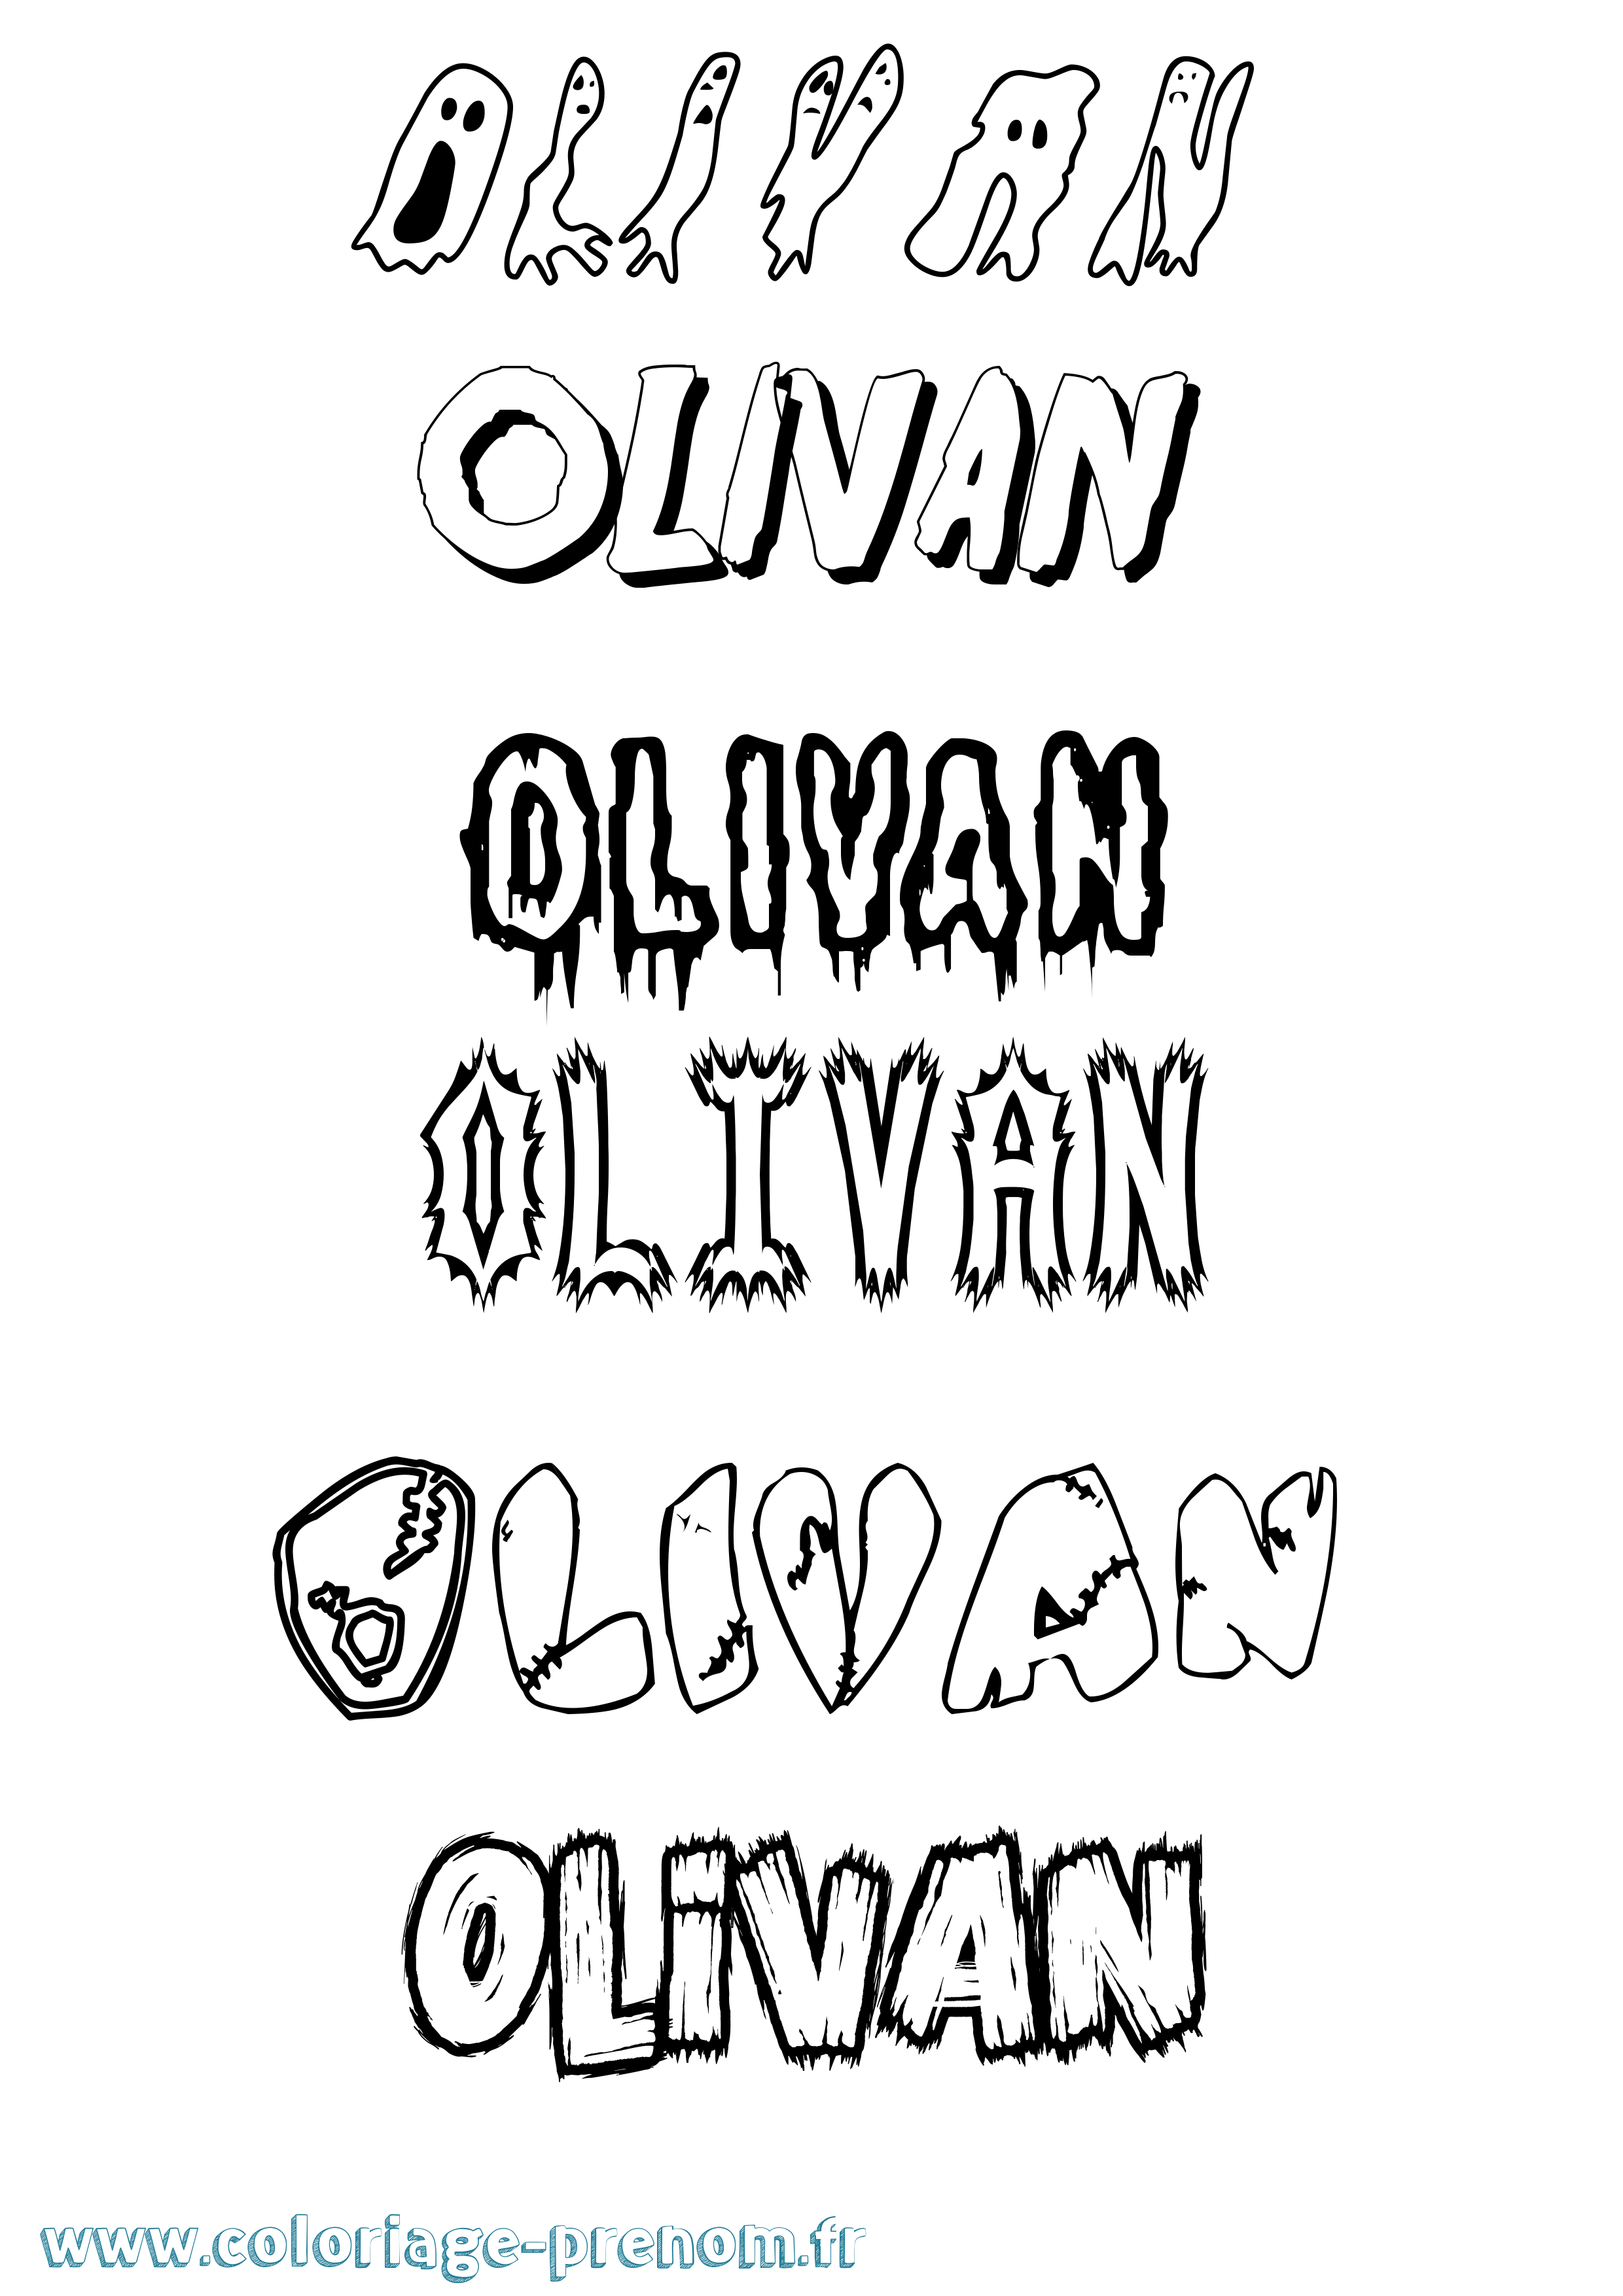 Coloriage prénom Olivan Frisson